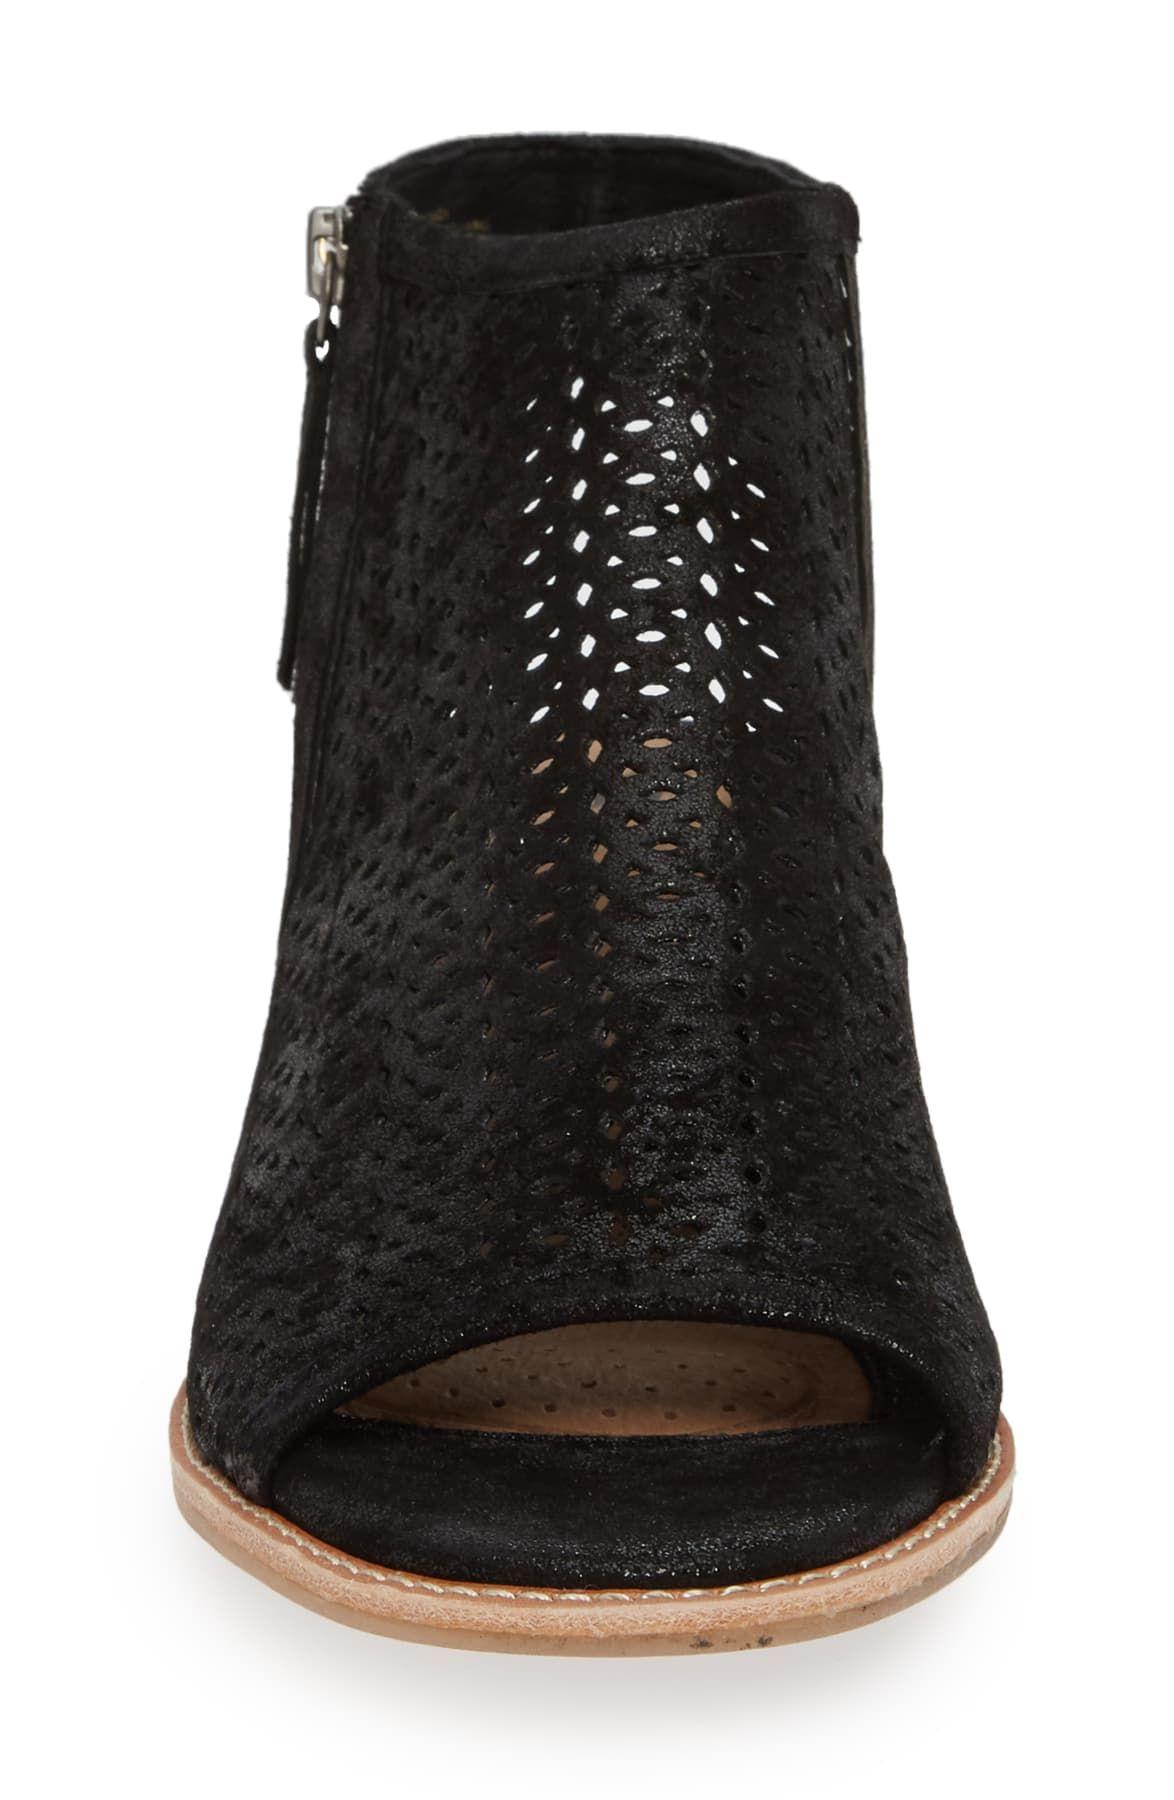 Natesa Perforated Sandal in Black Suede 